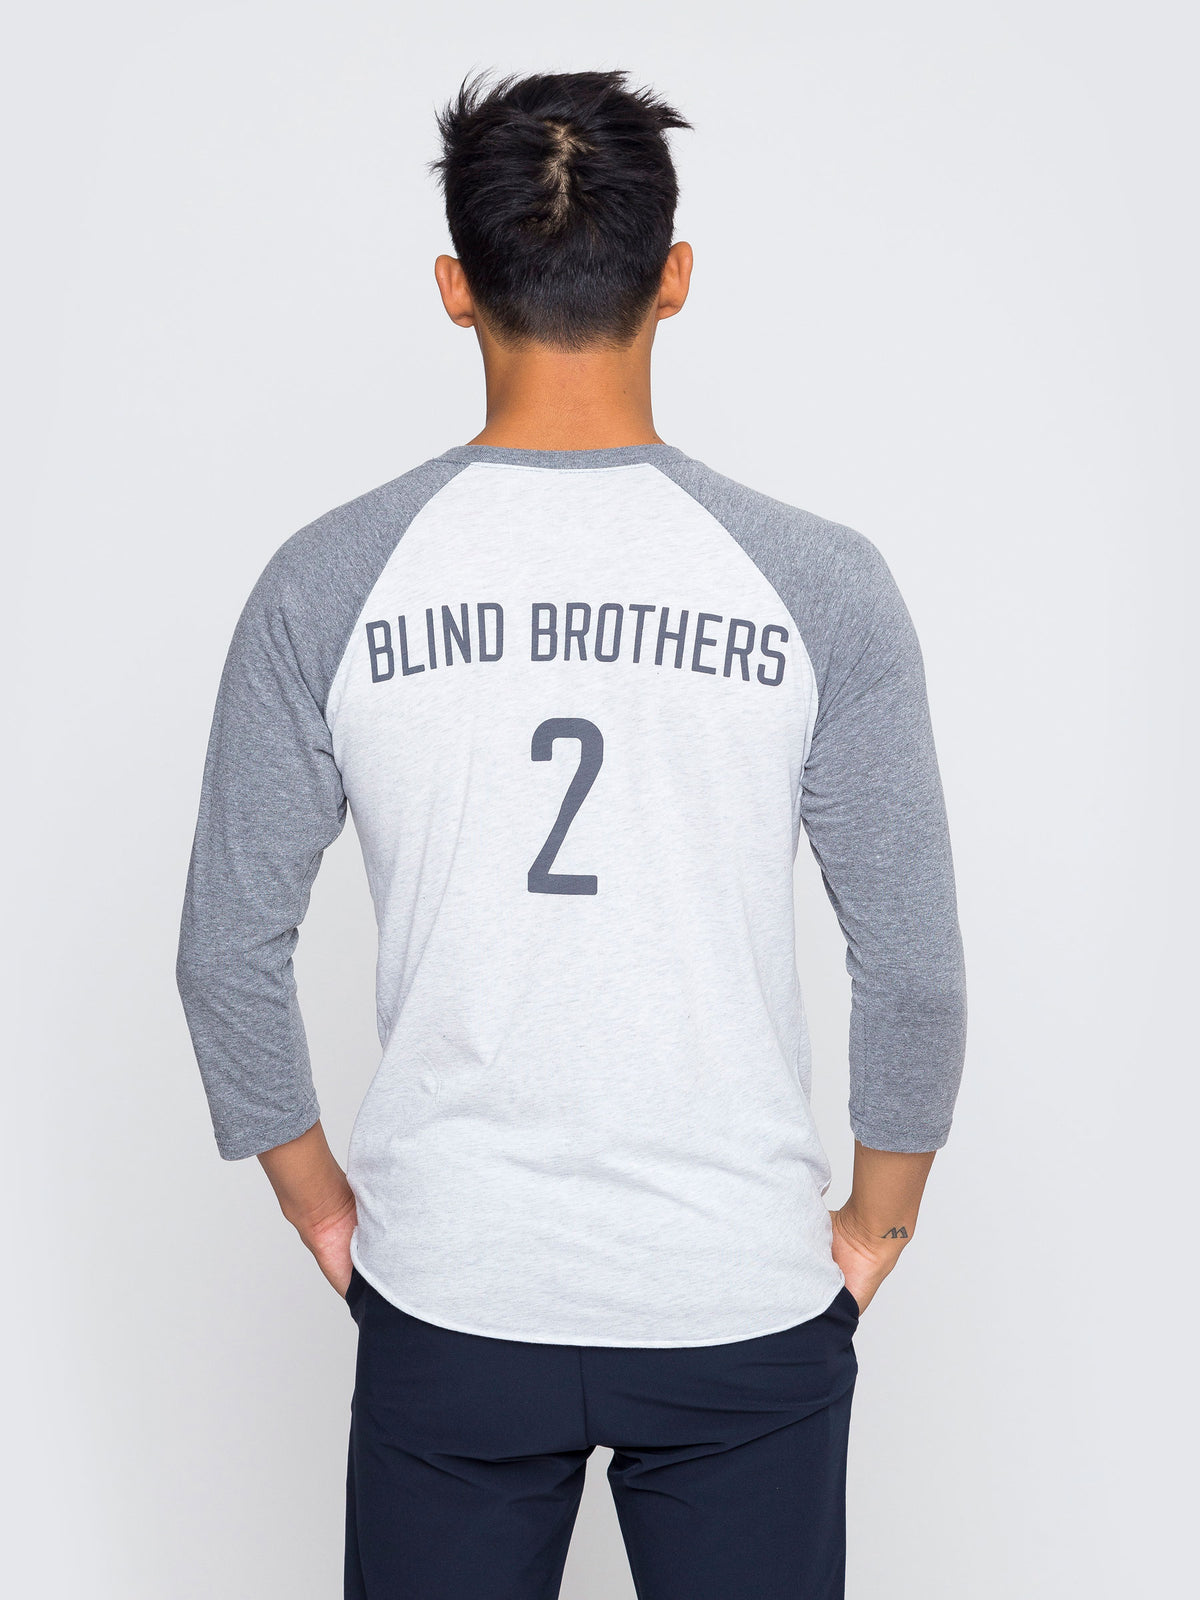 Two Blind Brothers - Mens 2BB Baseball Graphic Raglan Grey